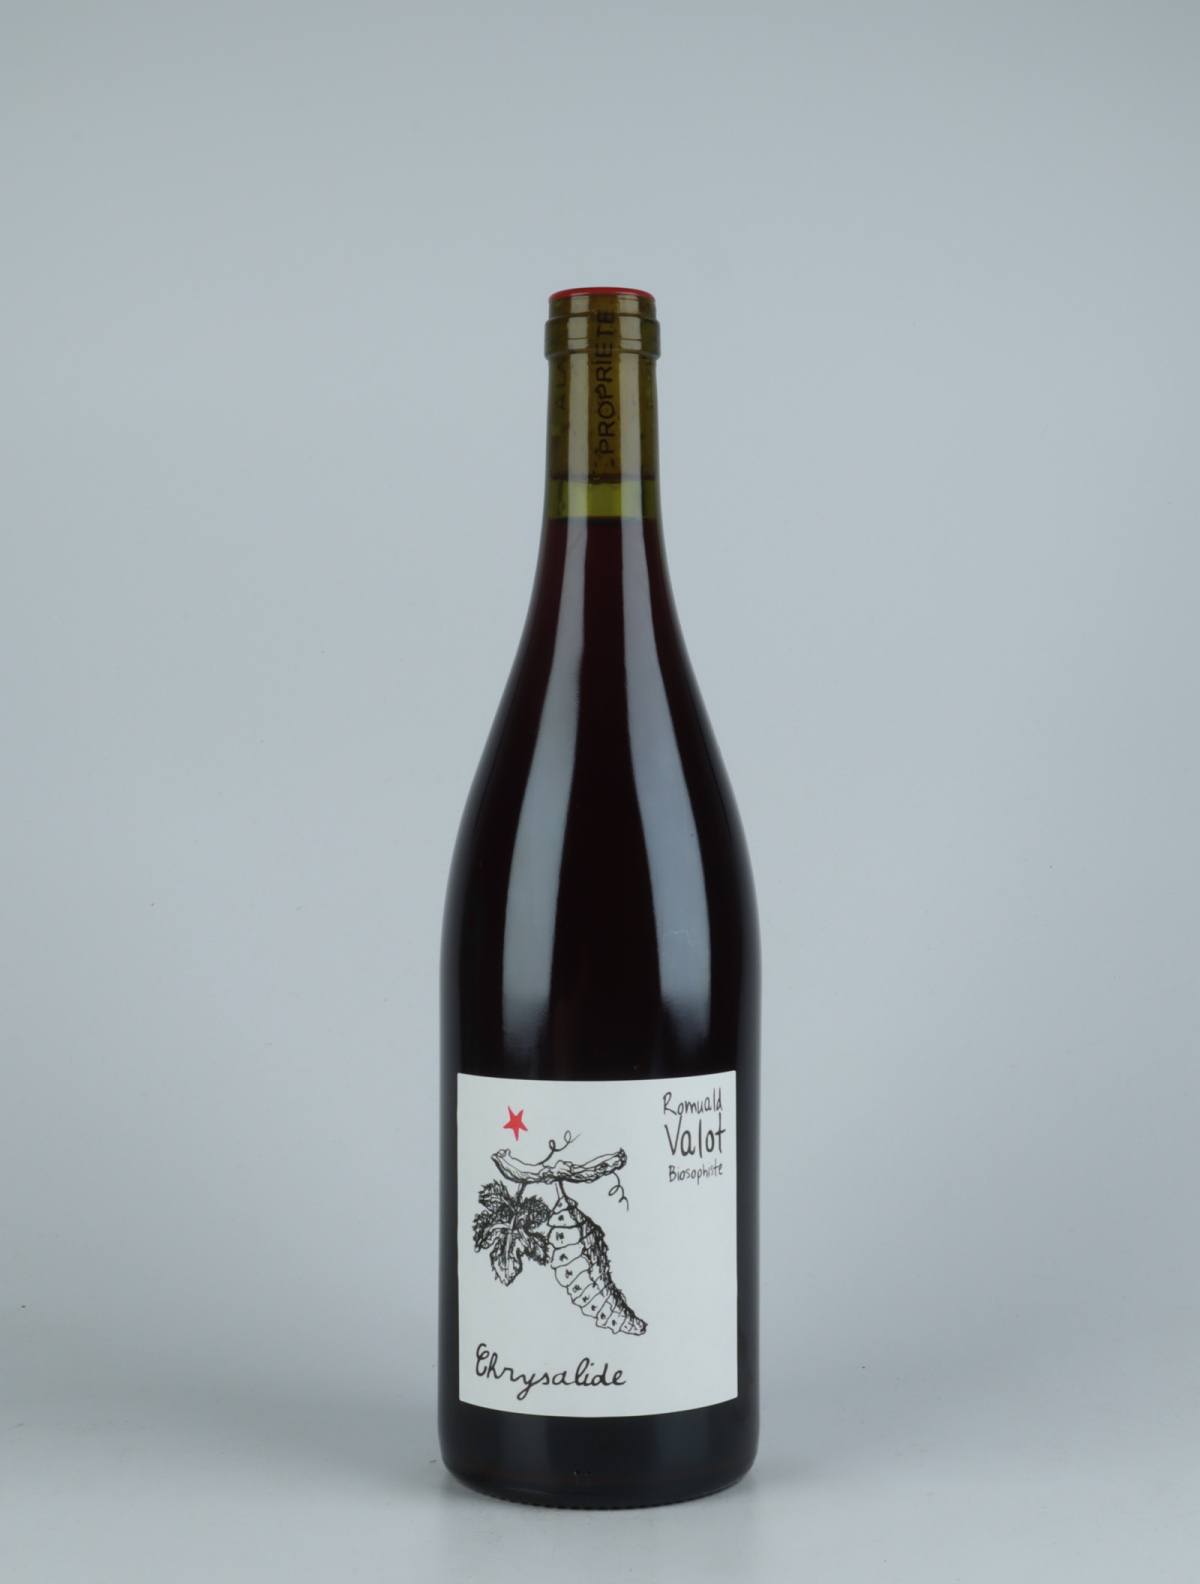 En flaske 2021 Chrysalide Rødvin fra Romuald Valot, Beaujolais i Frankrig